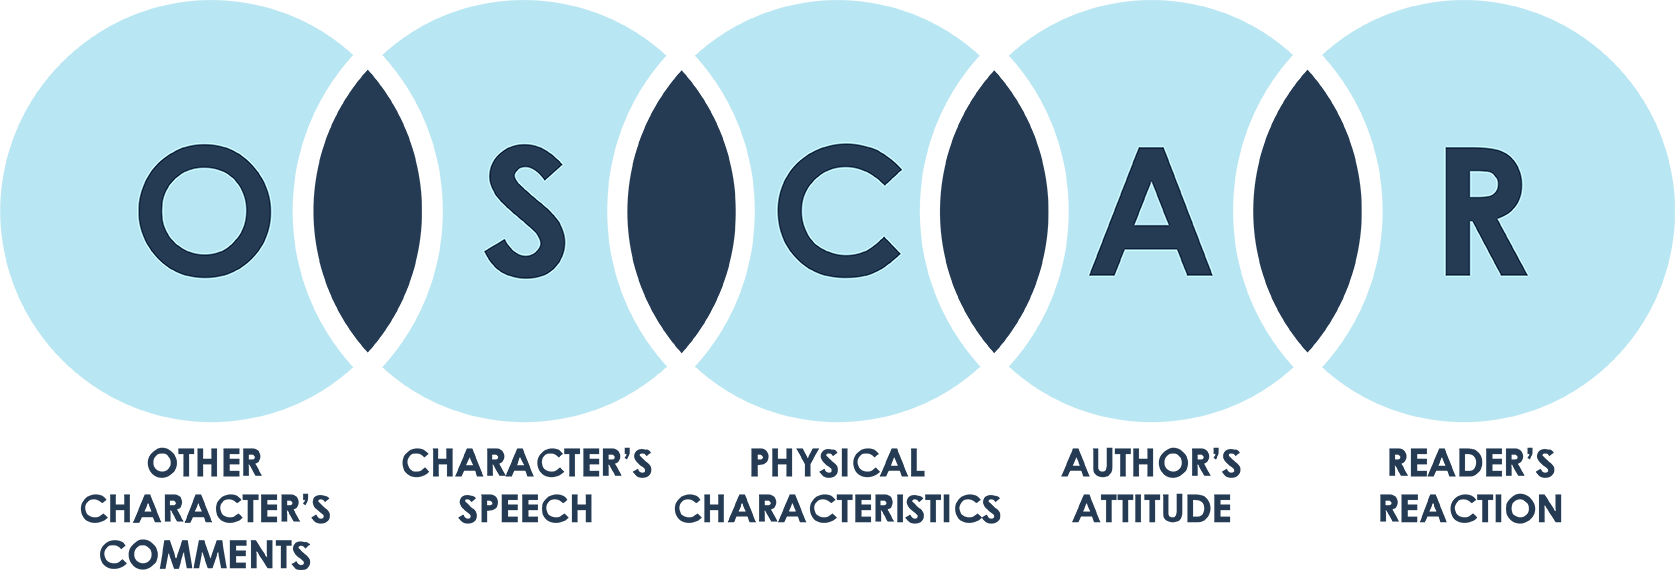 OSCAR-karakteranalyse